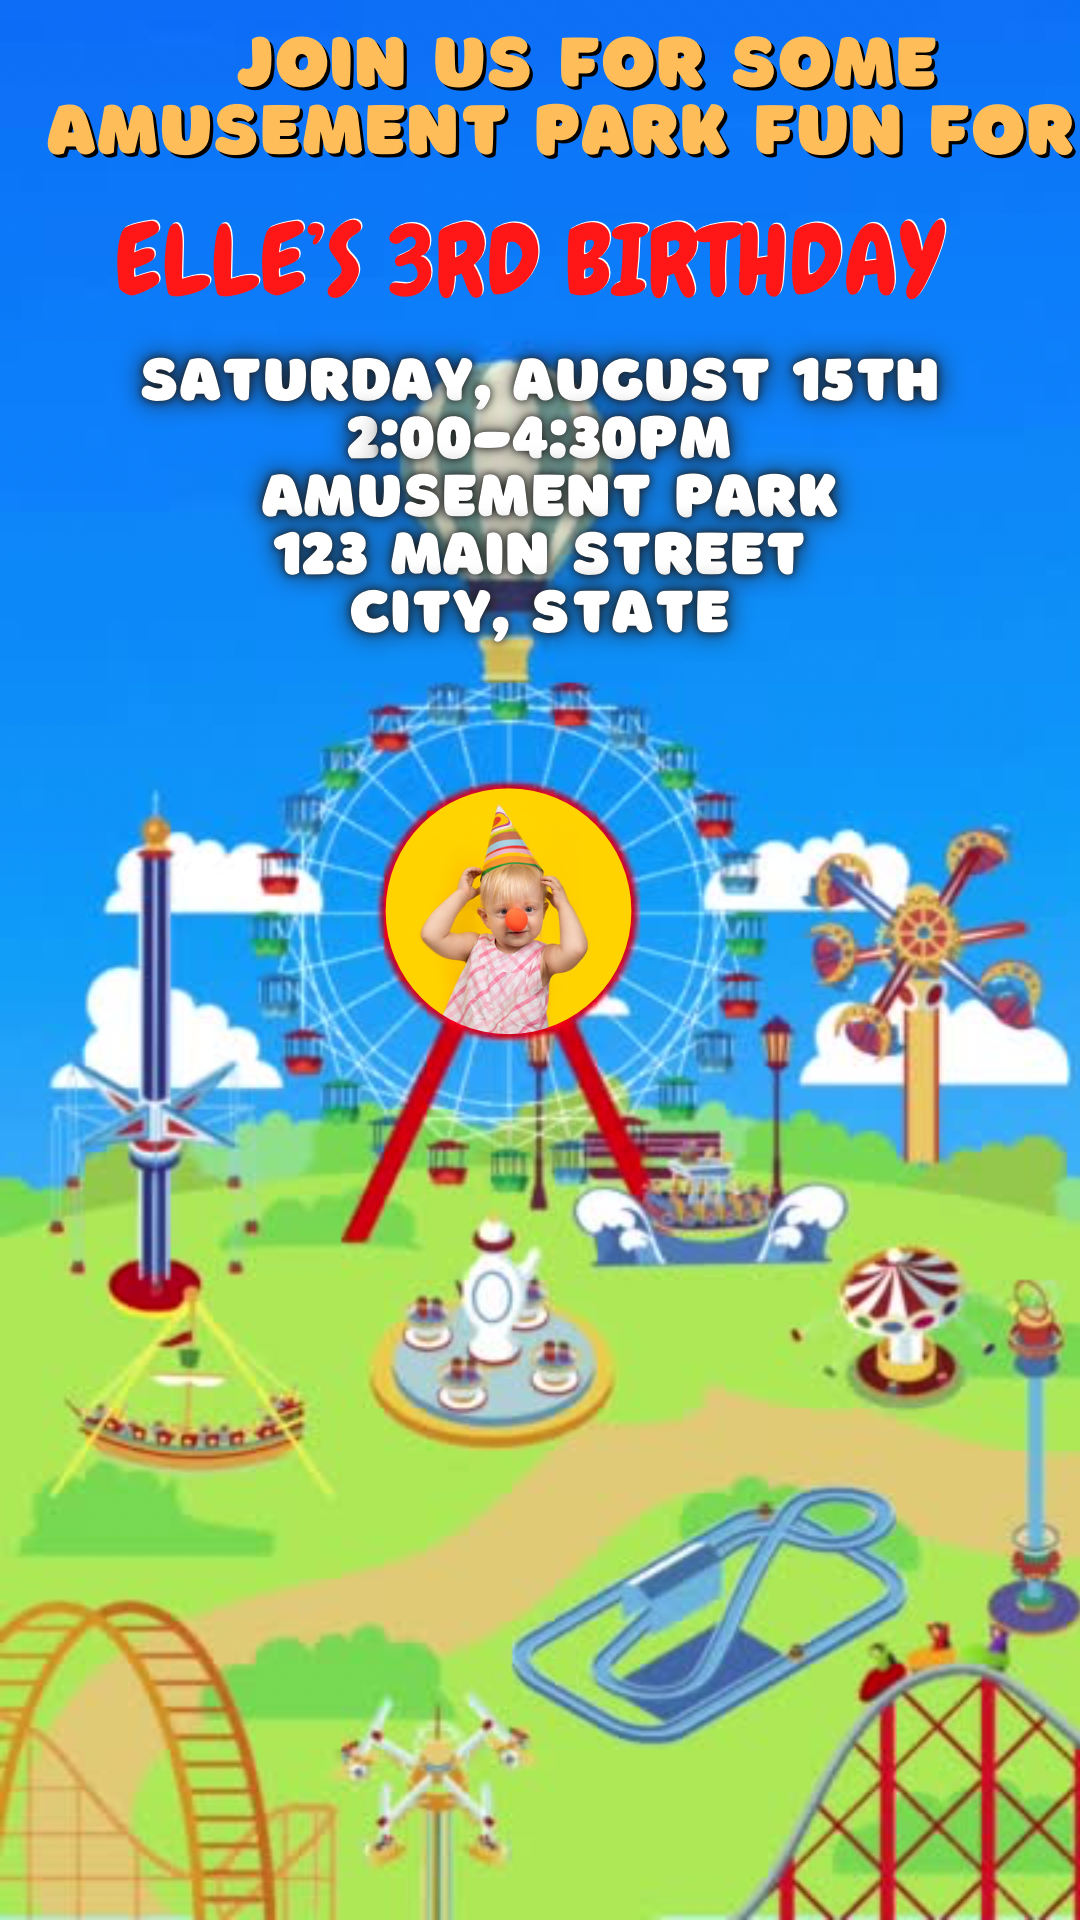 Amusement Park Video invitation, Carnival birthday invitation